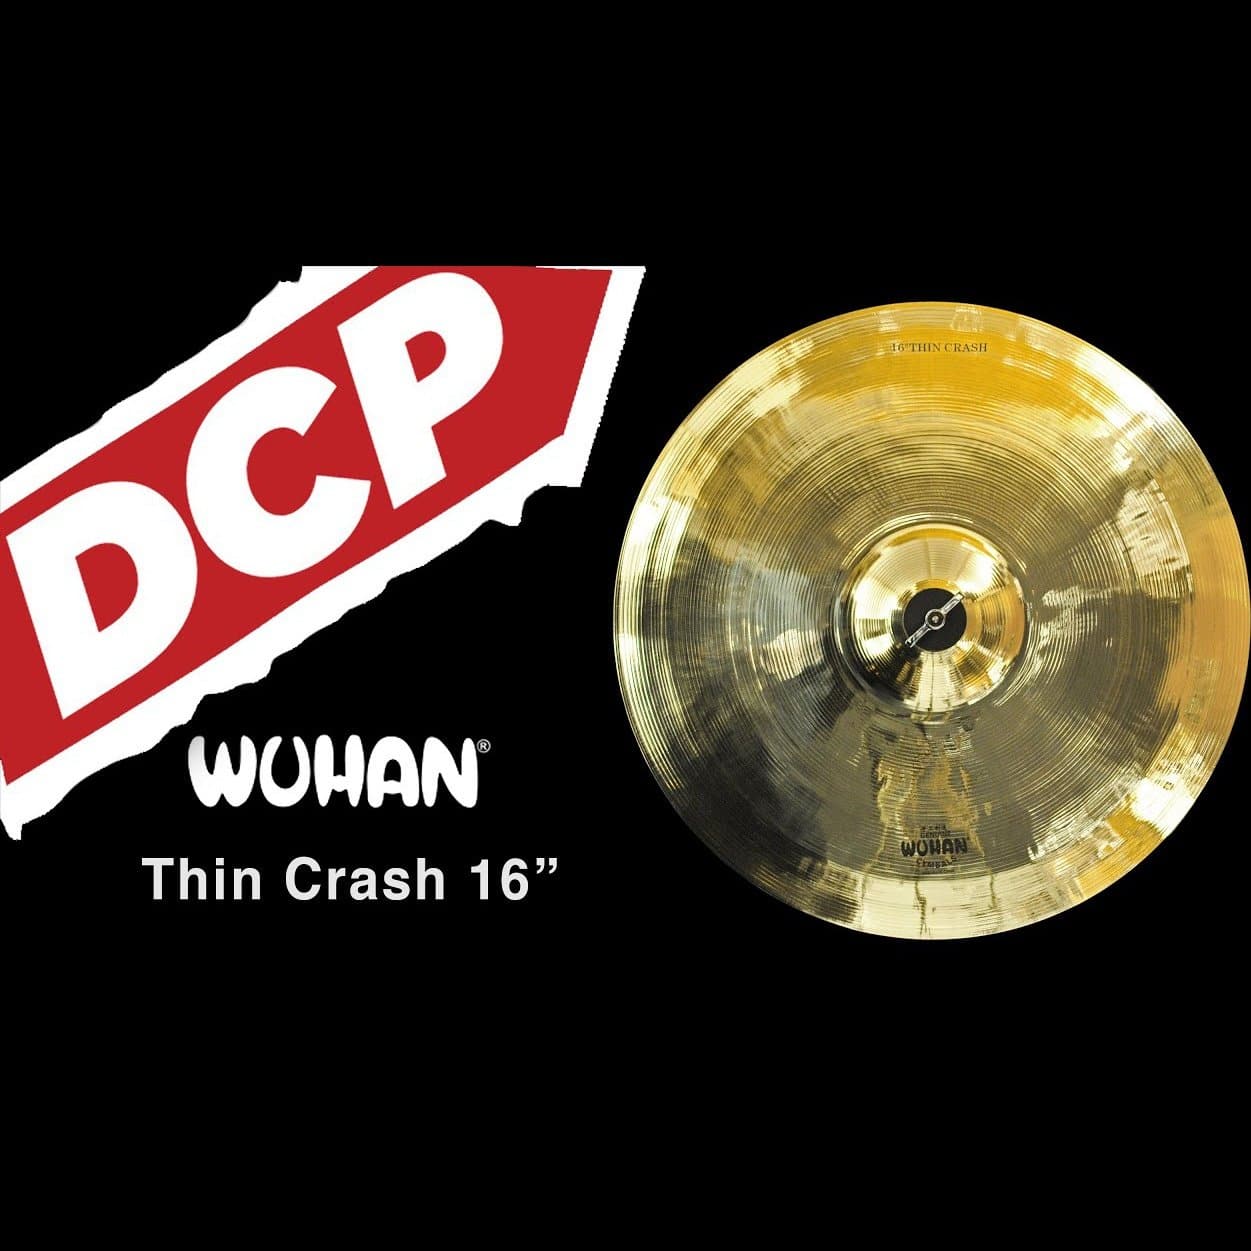 Wuhan Thin Crash Cymbal 16